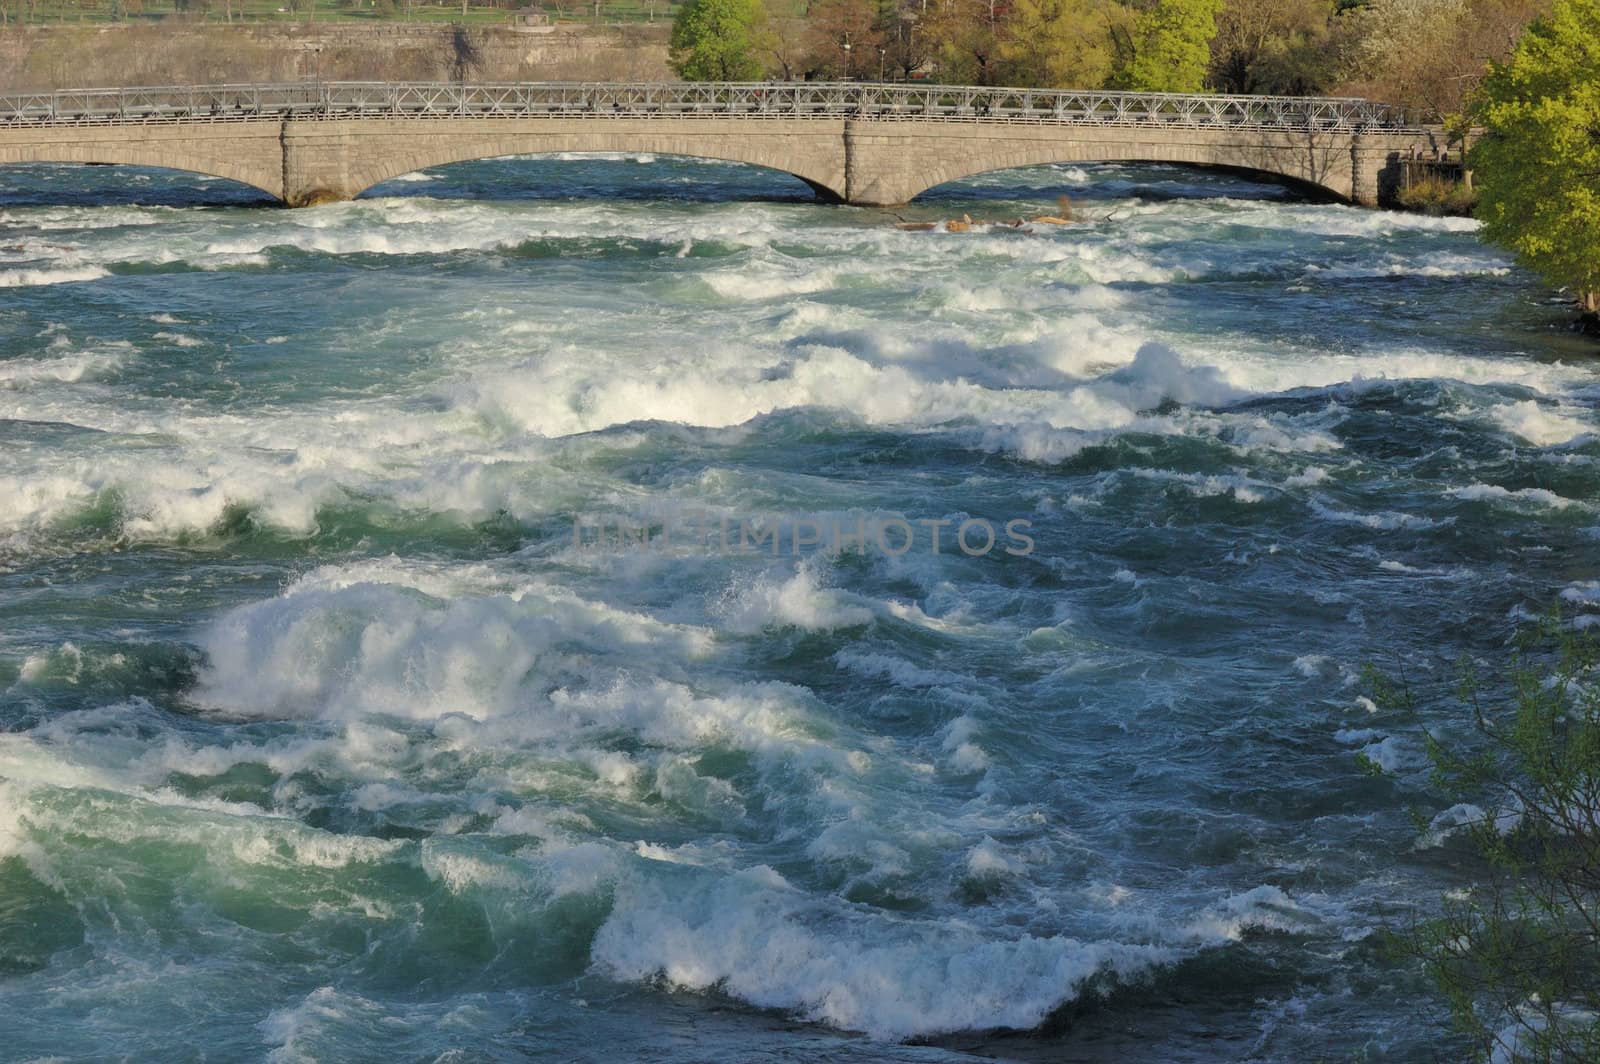 River rapids of the upper Niagara River before the falls.